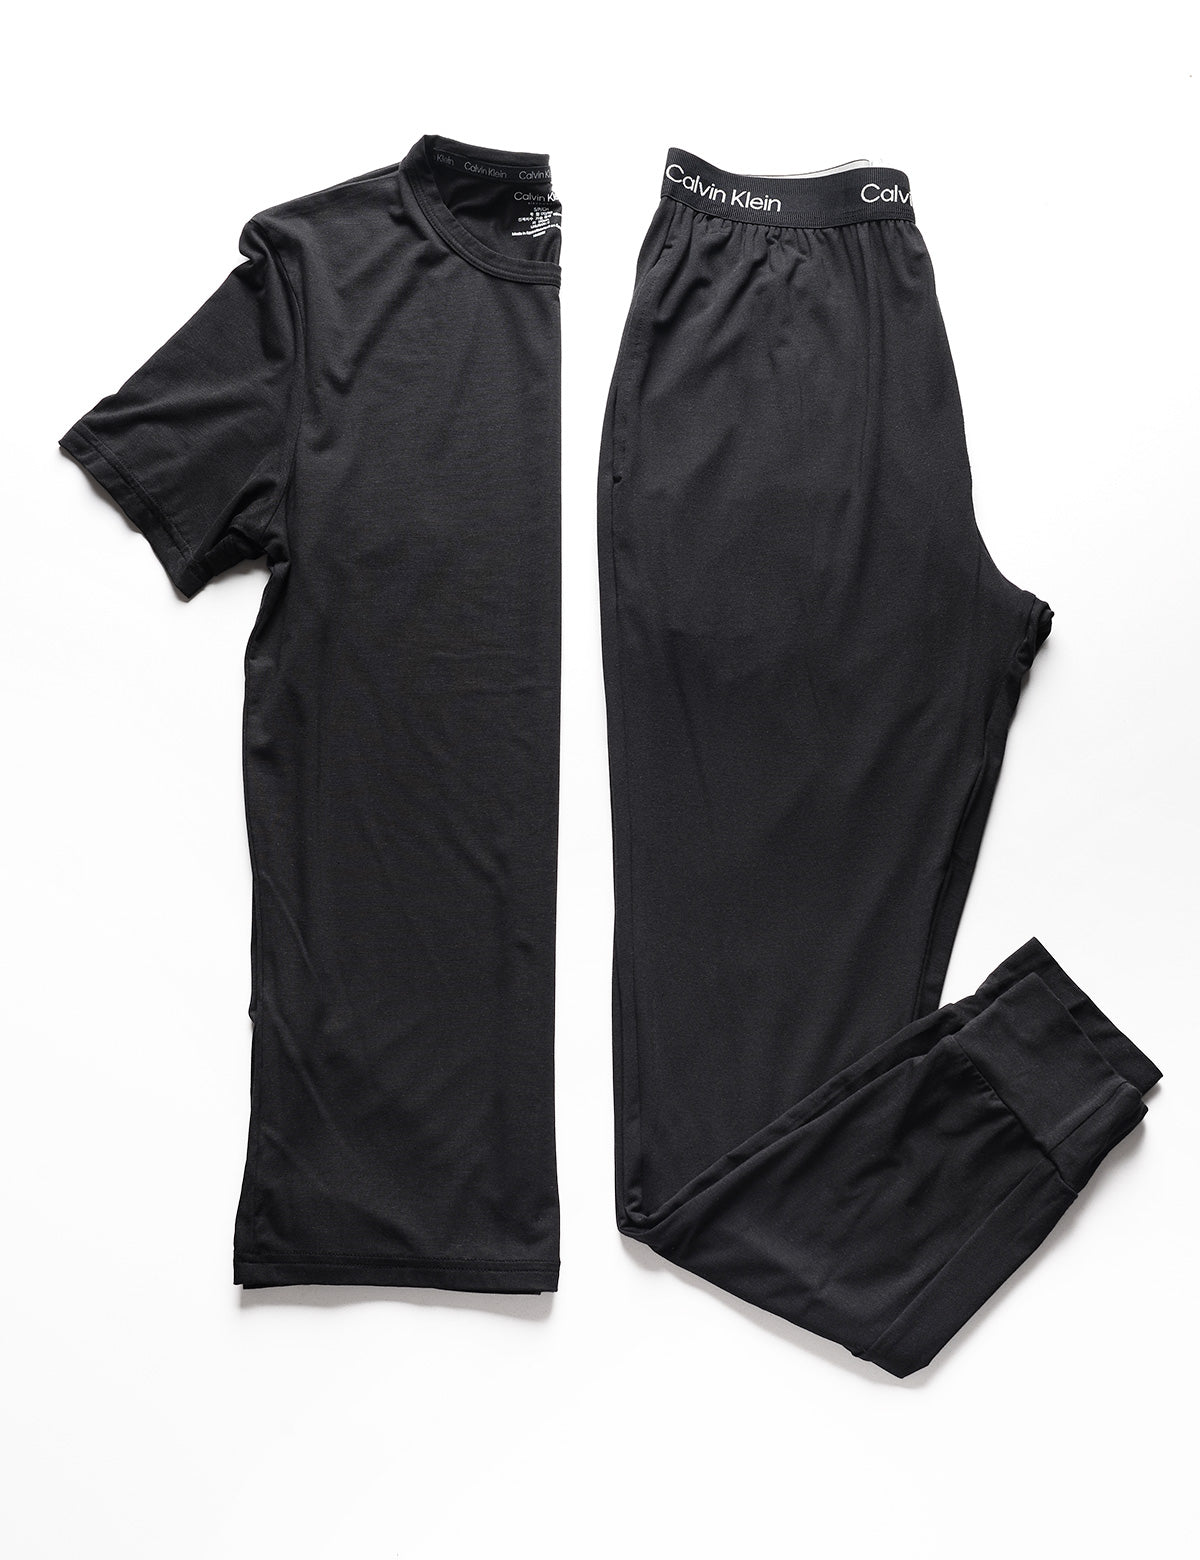 Folded shot of Ultra-Soft Modern Jogger - Black next to black t-shirt